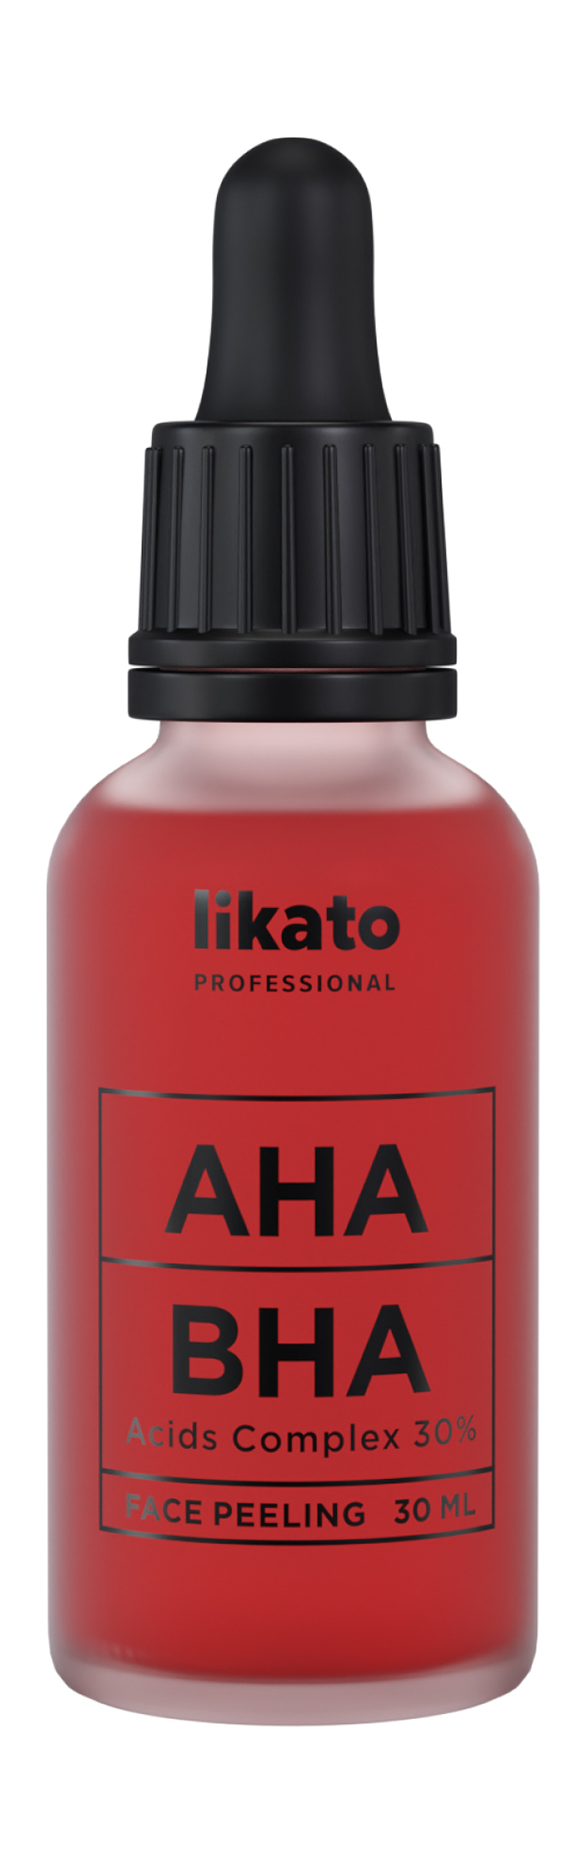 Пилинг для лица Likato Professional AHA + BHA Acids Complex 30% отшелушивающий, 30 мл ретро космо комикс